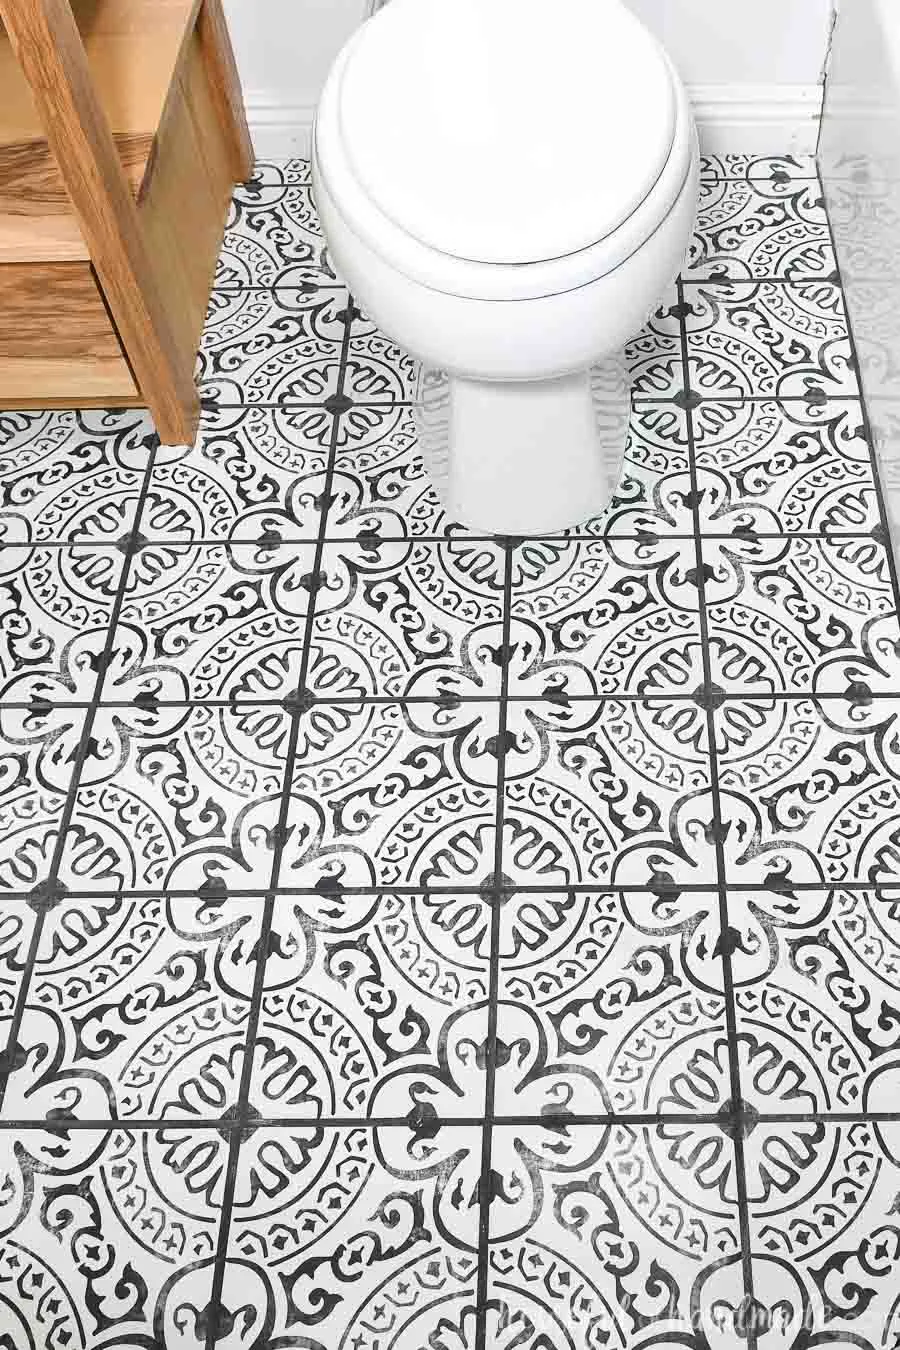 Laying Floor Tiles in a Small Bathroom - Houseful of Handmade